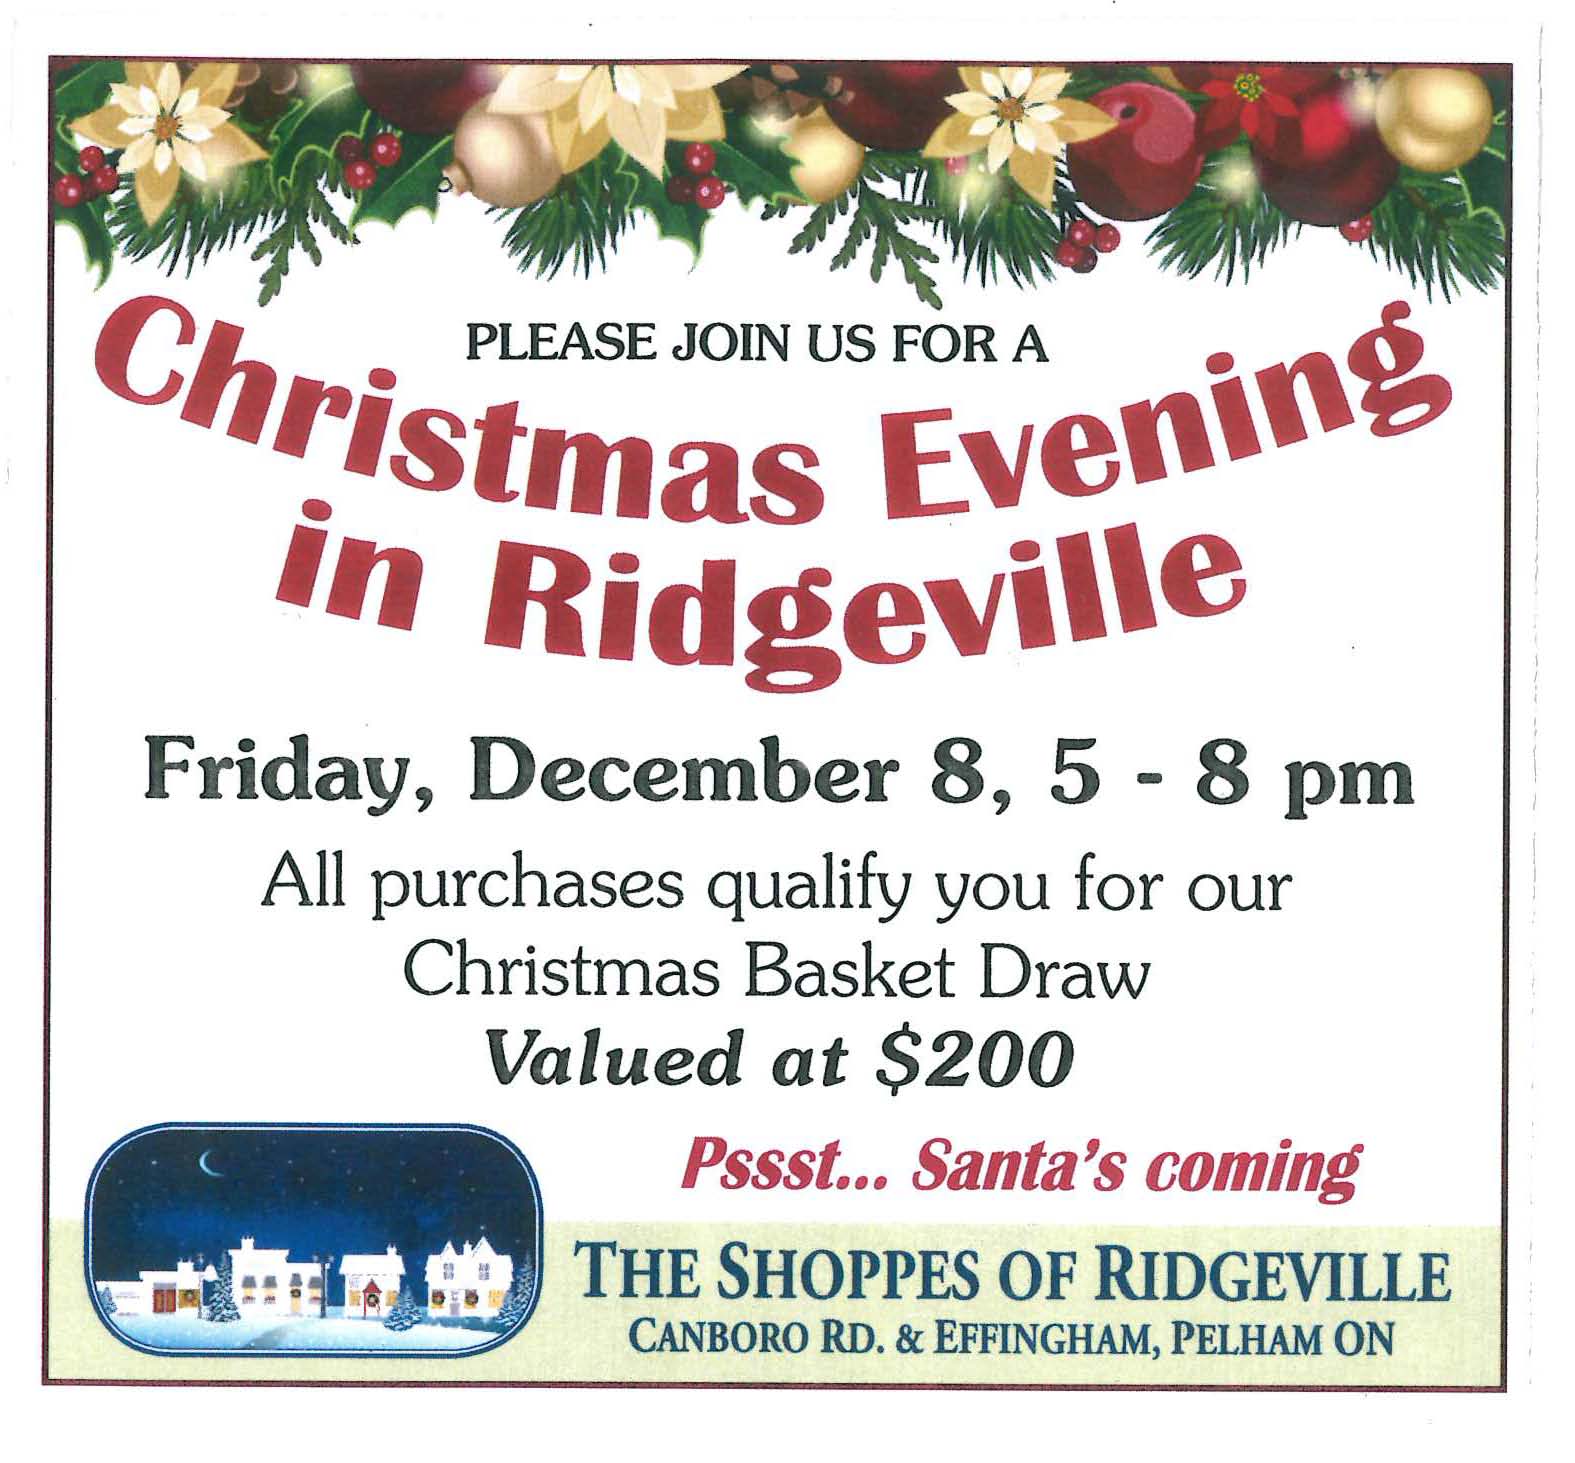 Christmas Evening in Ridgeville